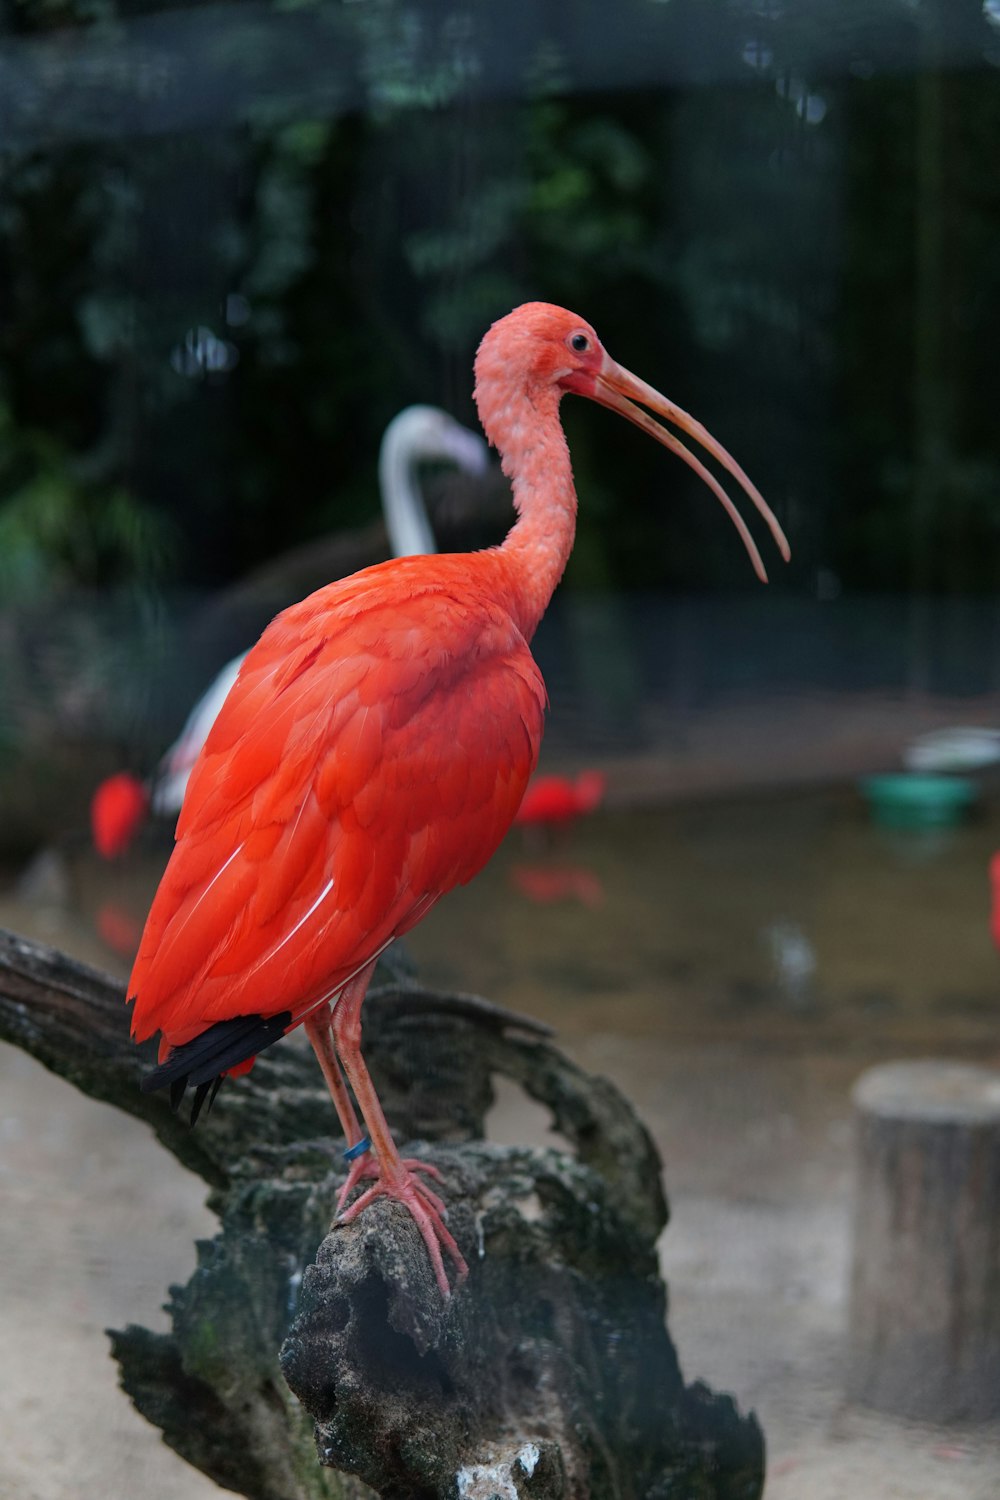 red long-beaked bird